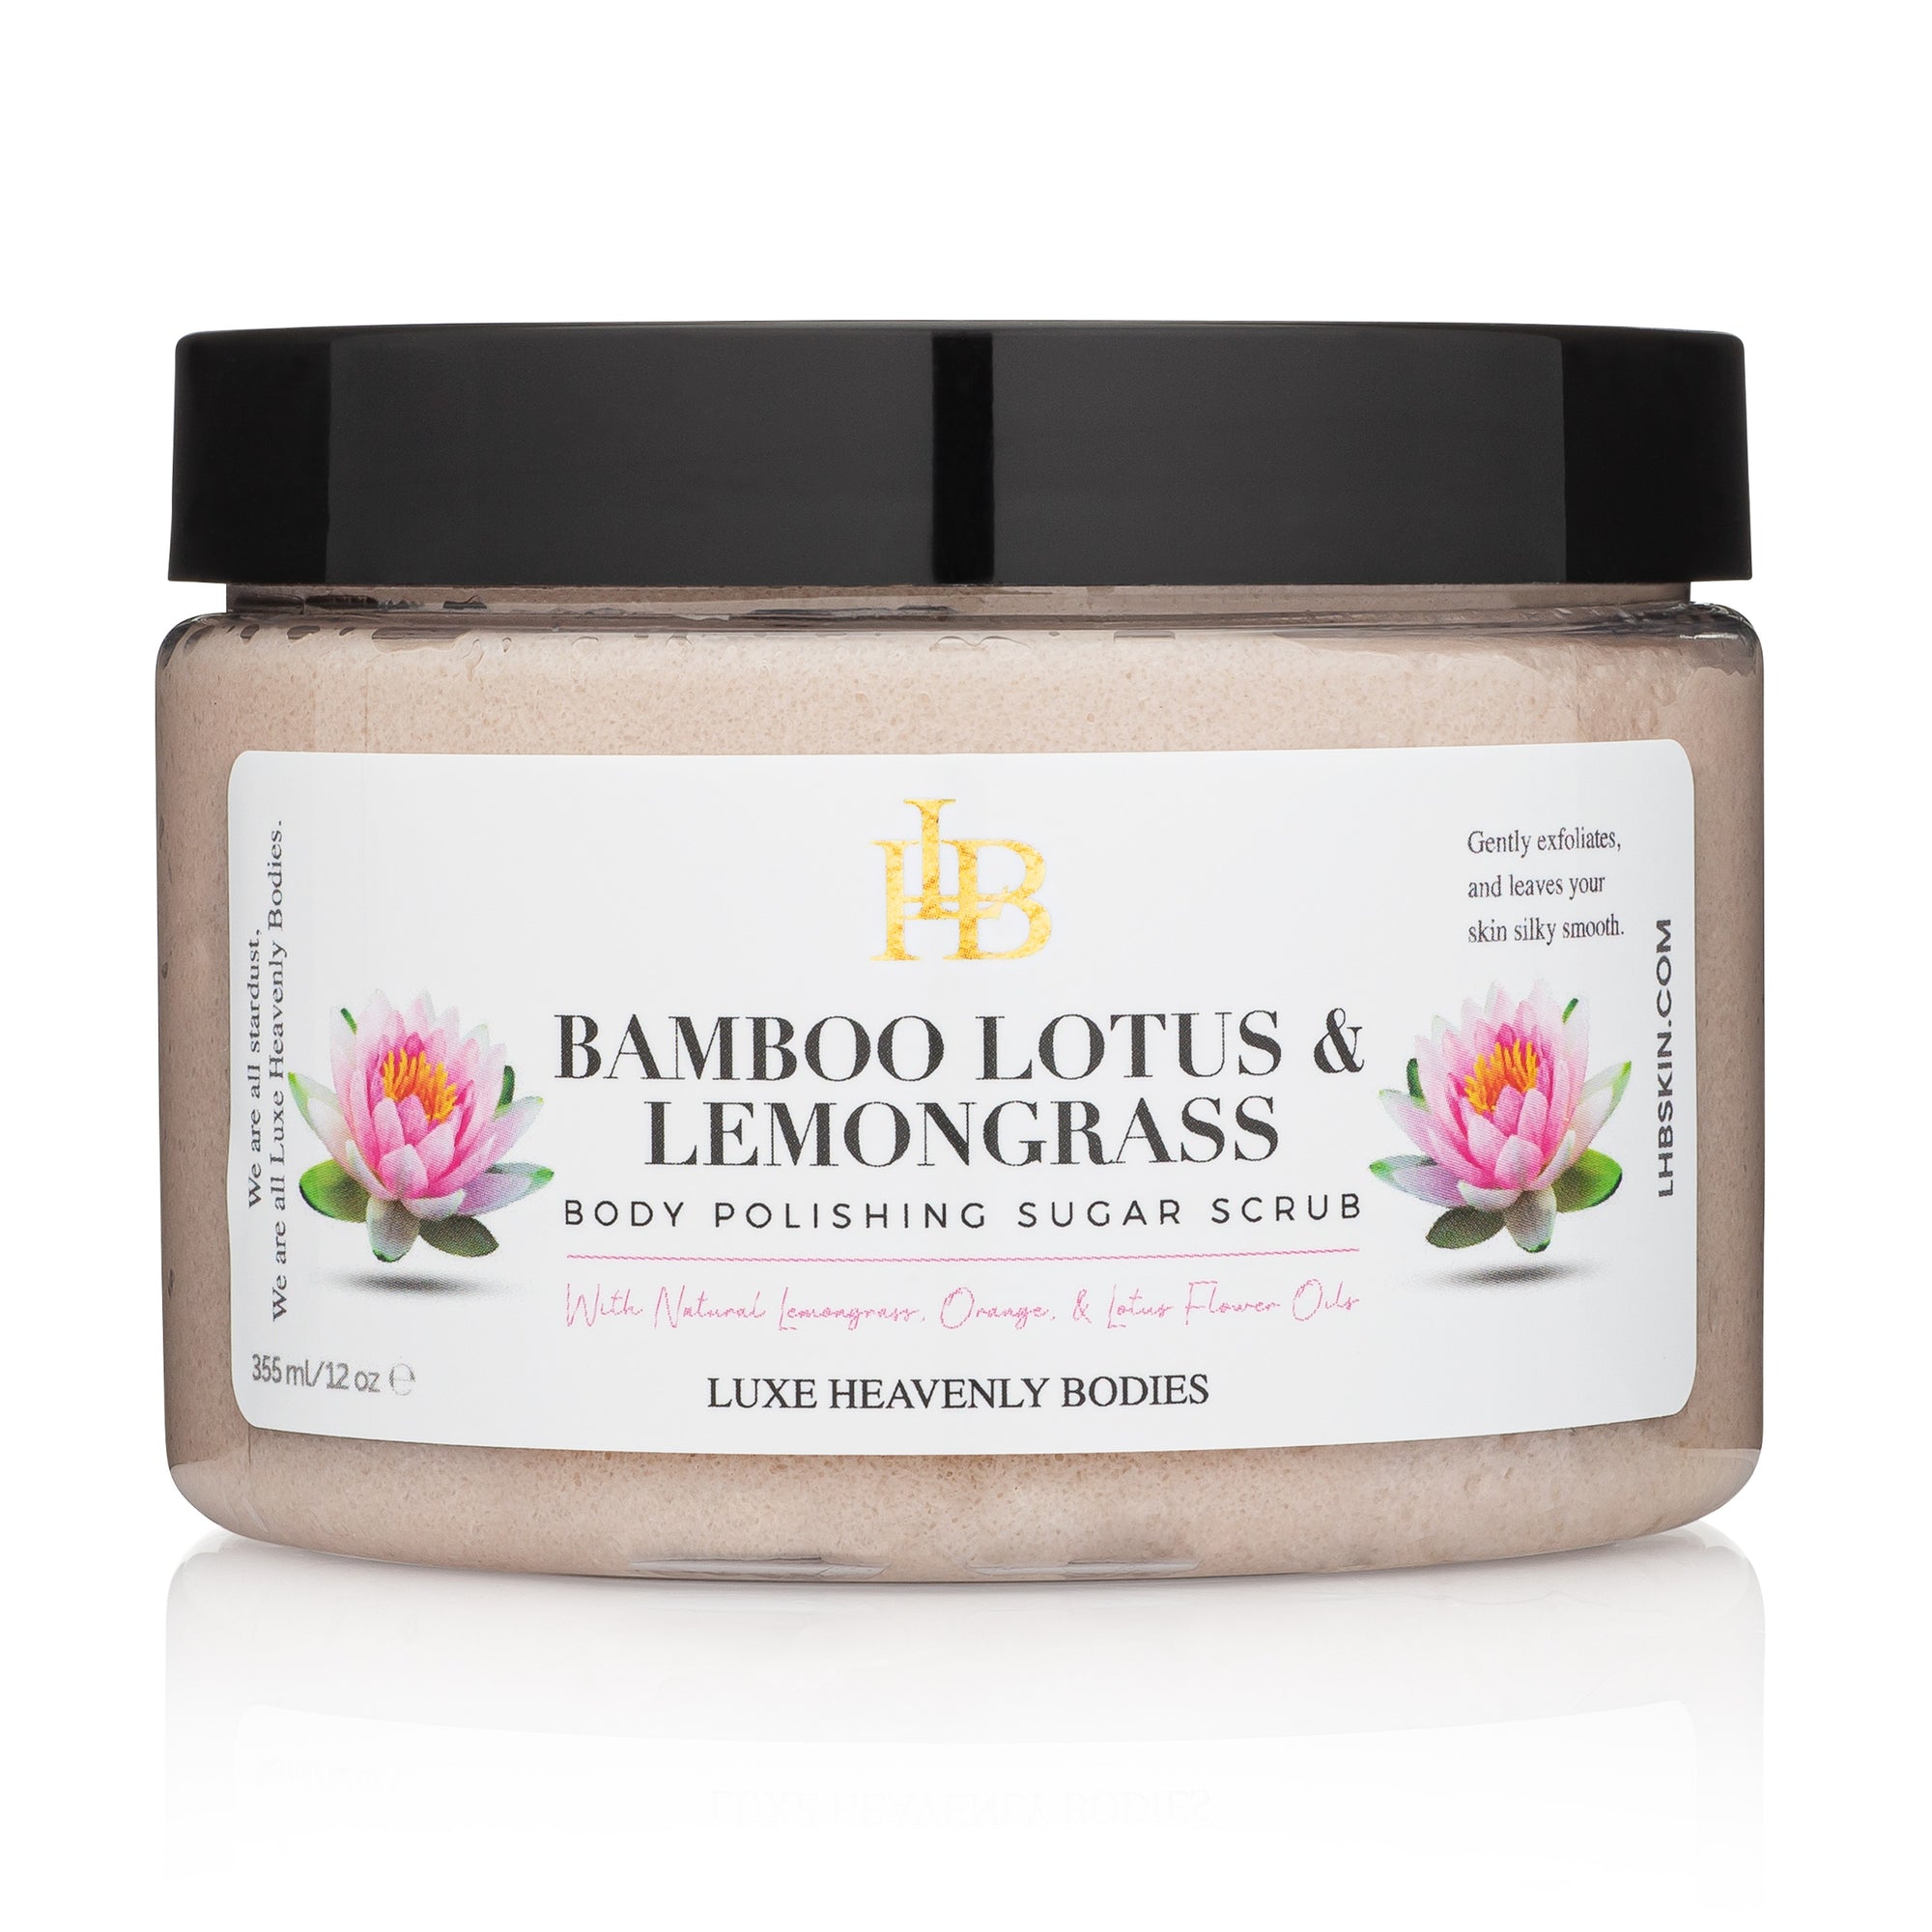 Bamboo Lotus & Lemongrass Body Polishing Sugar Scrub